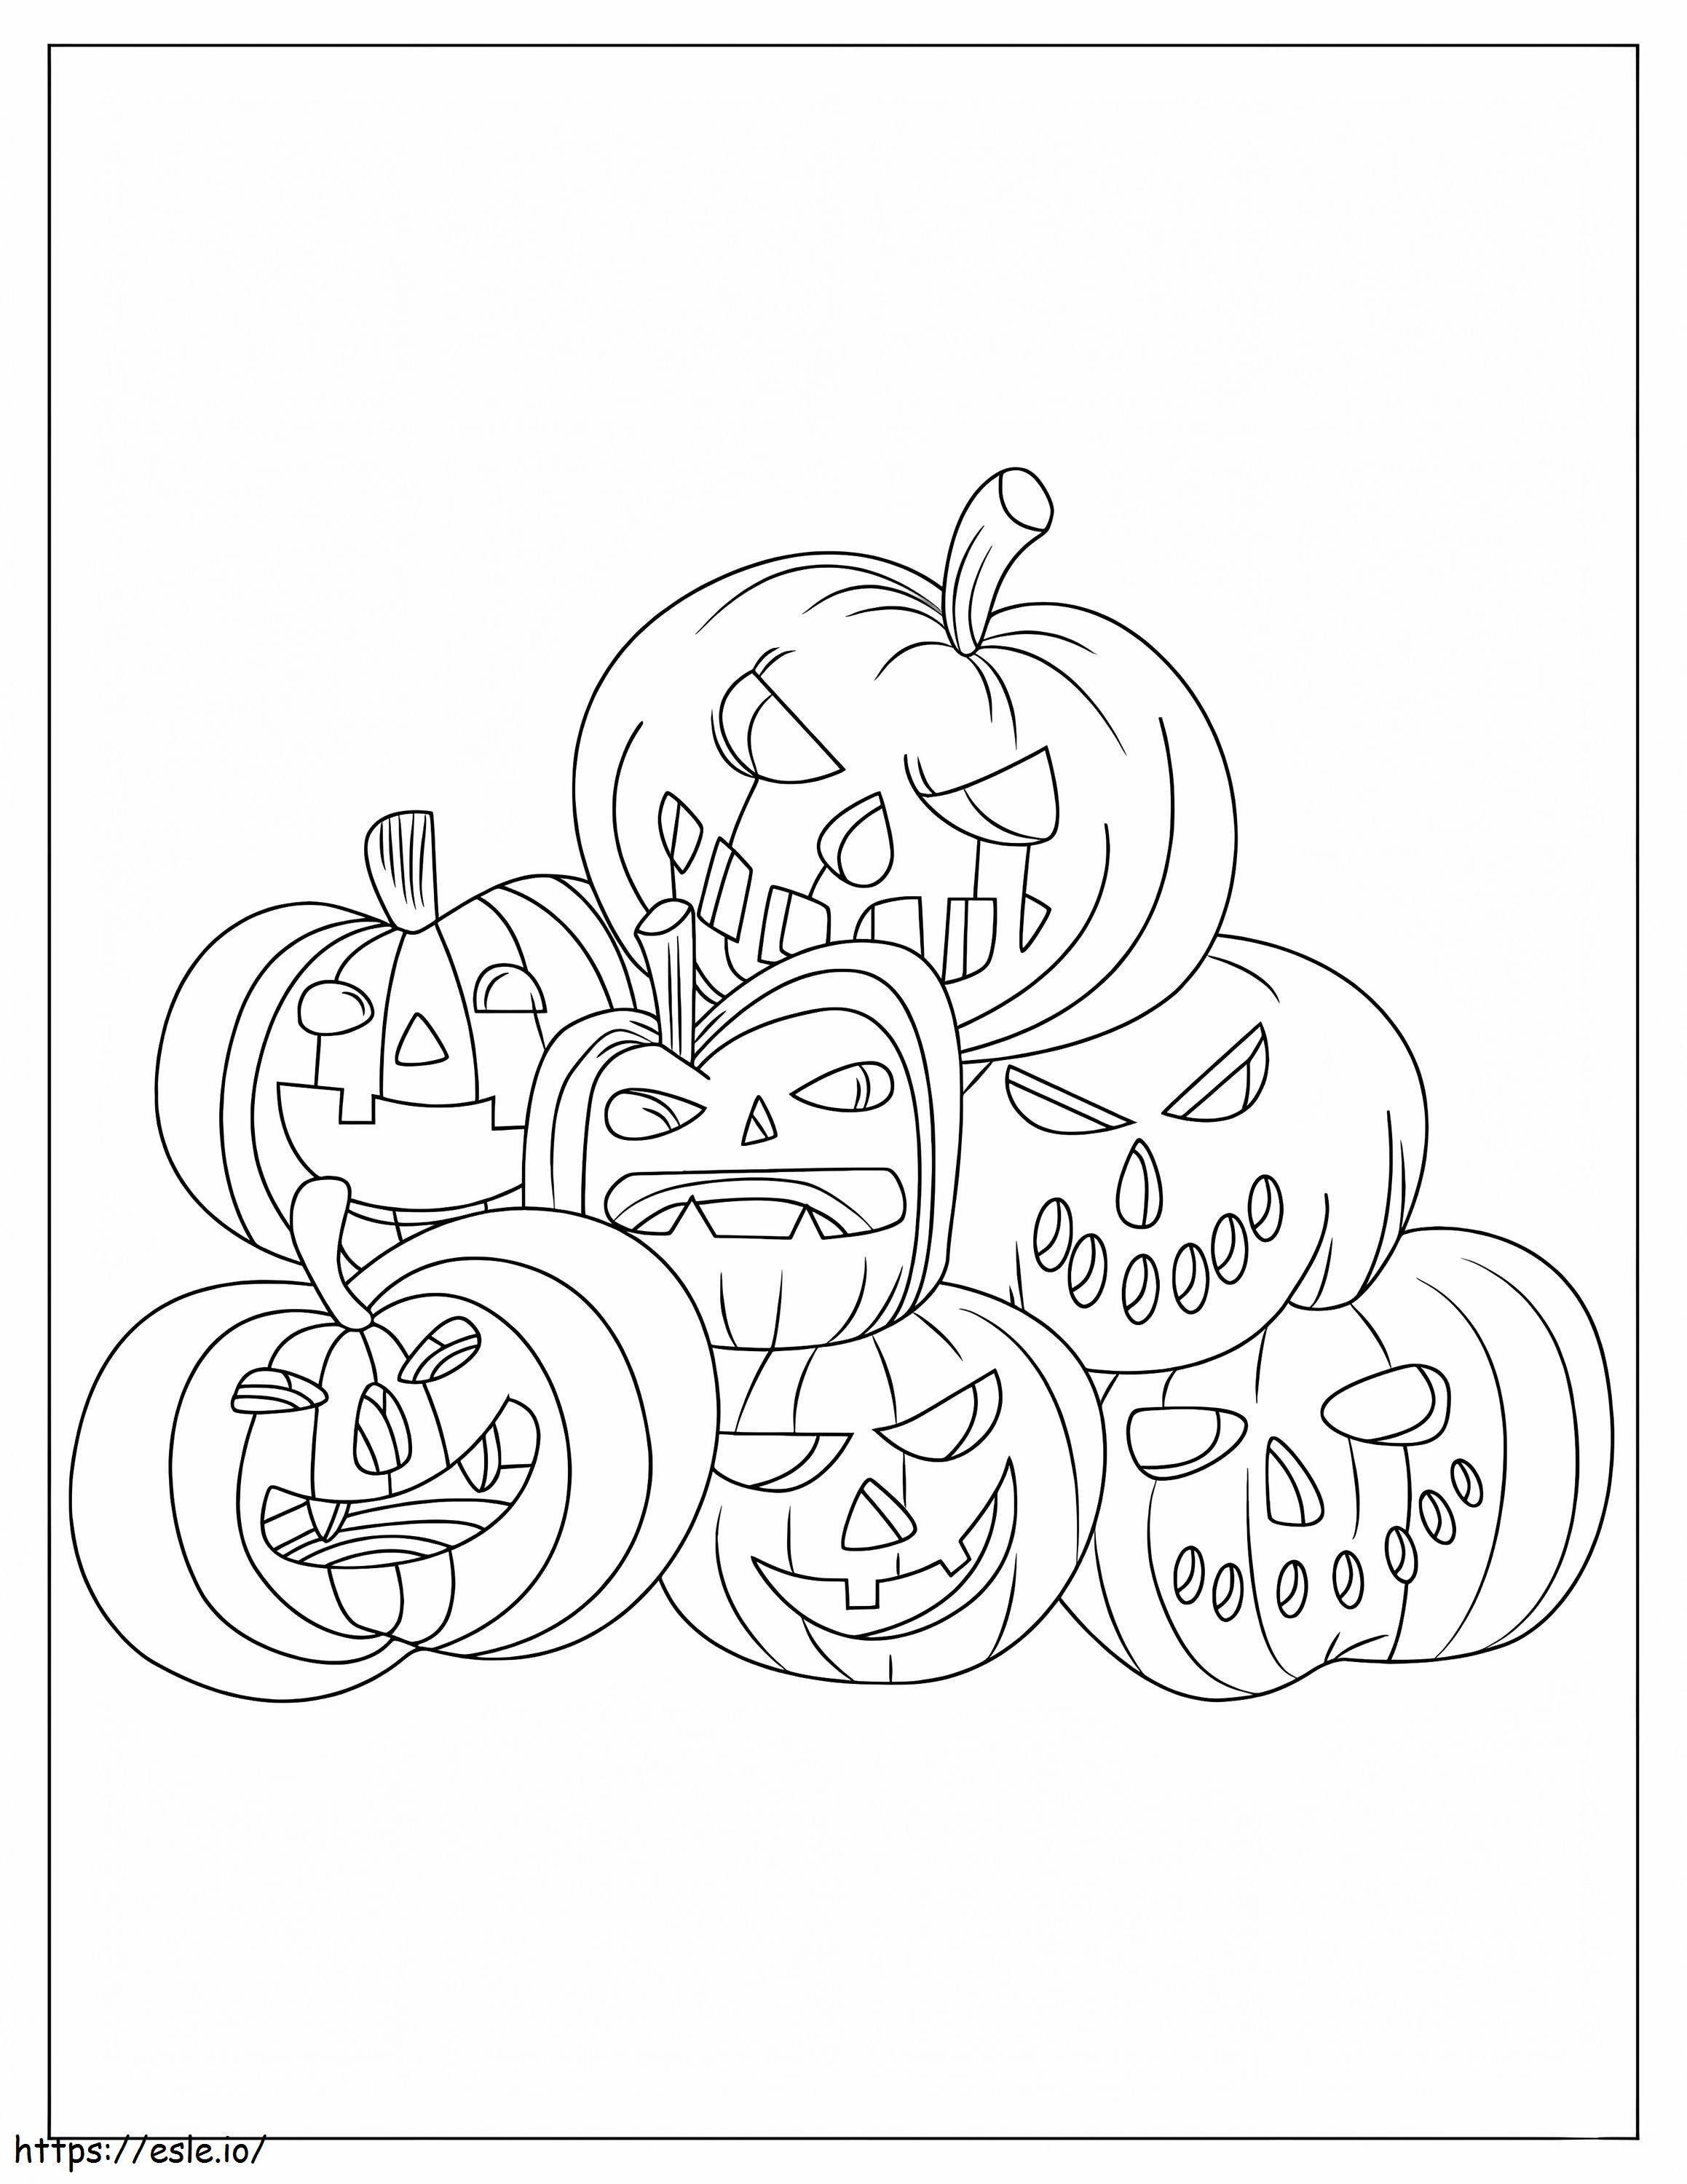 Seven Pumpkins coloring page